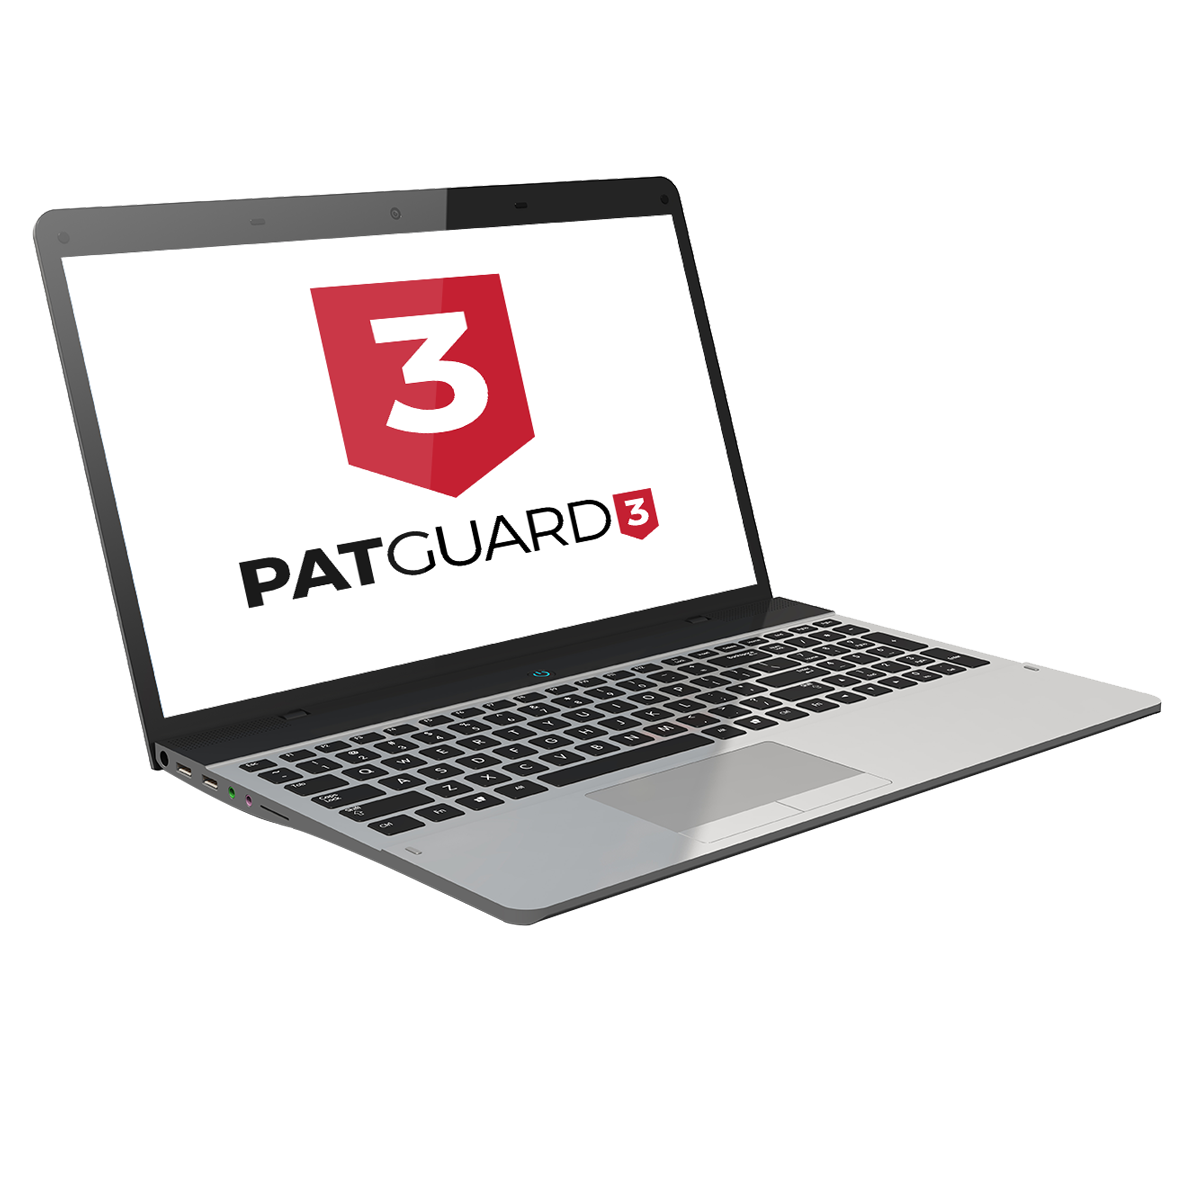 Seaward PATGuard 3 Software 1 year Licence 400A910 